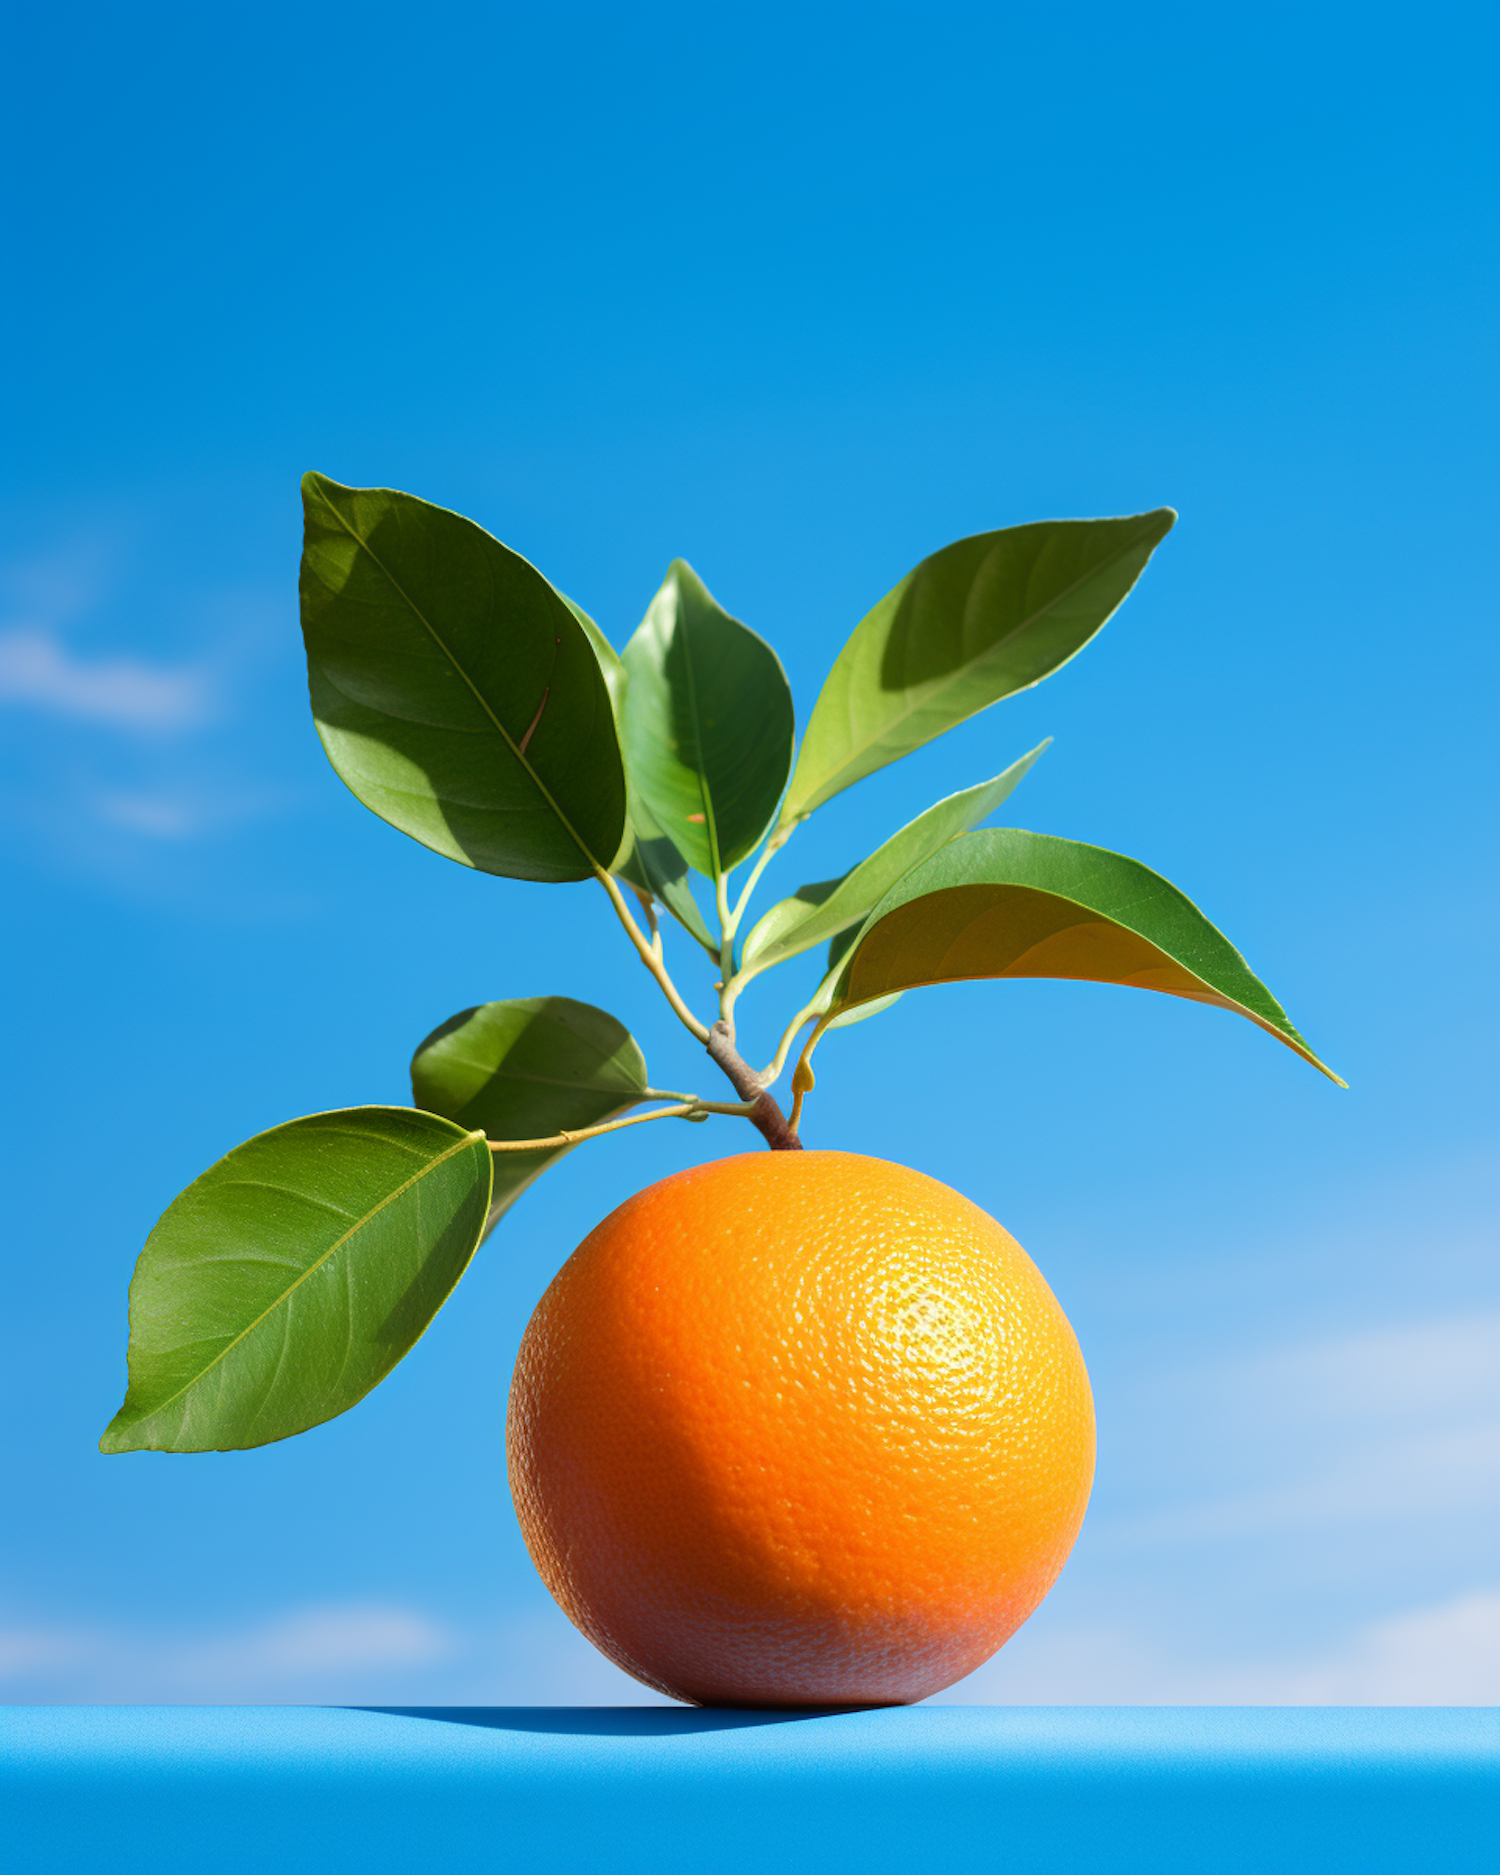 Sun-Kissed Orange with Sky Blue Backdrop